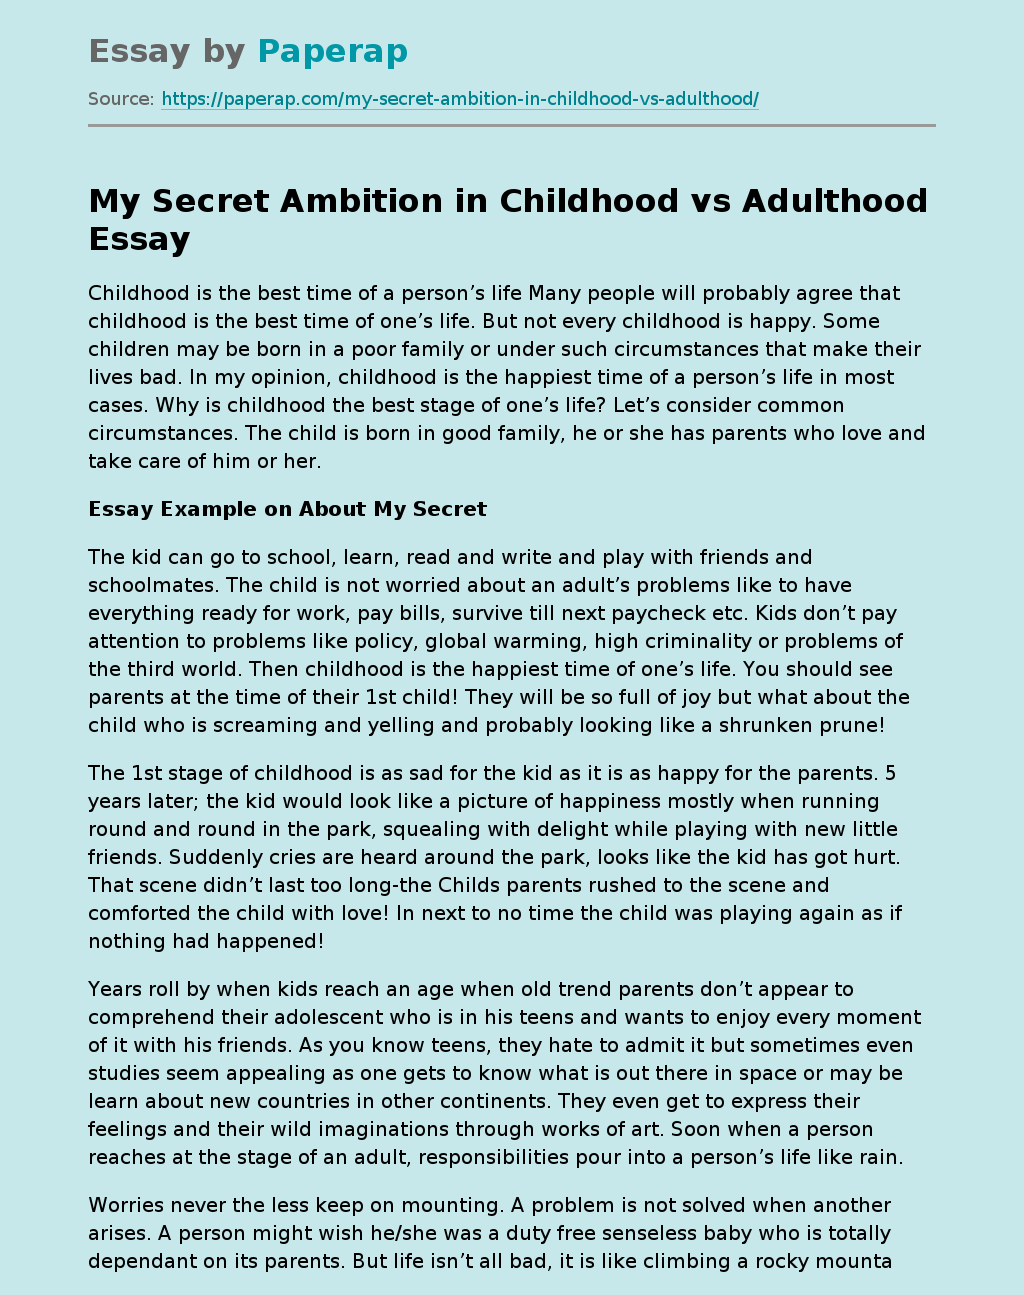 My Secret Ambition in Childhood vs Adulthood